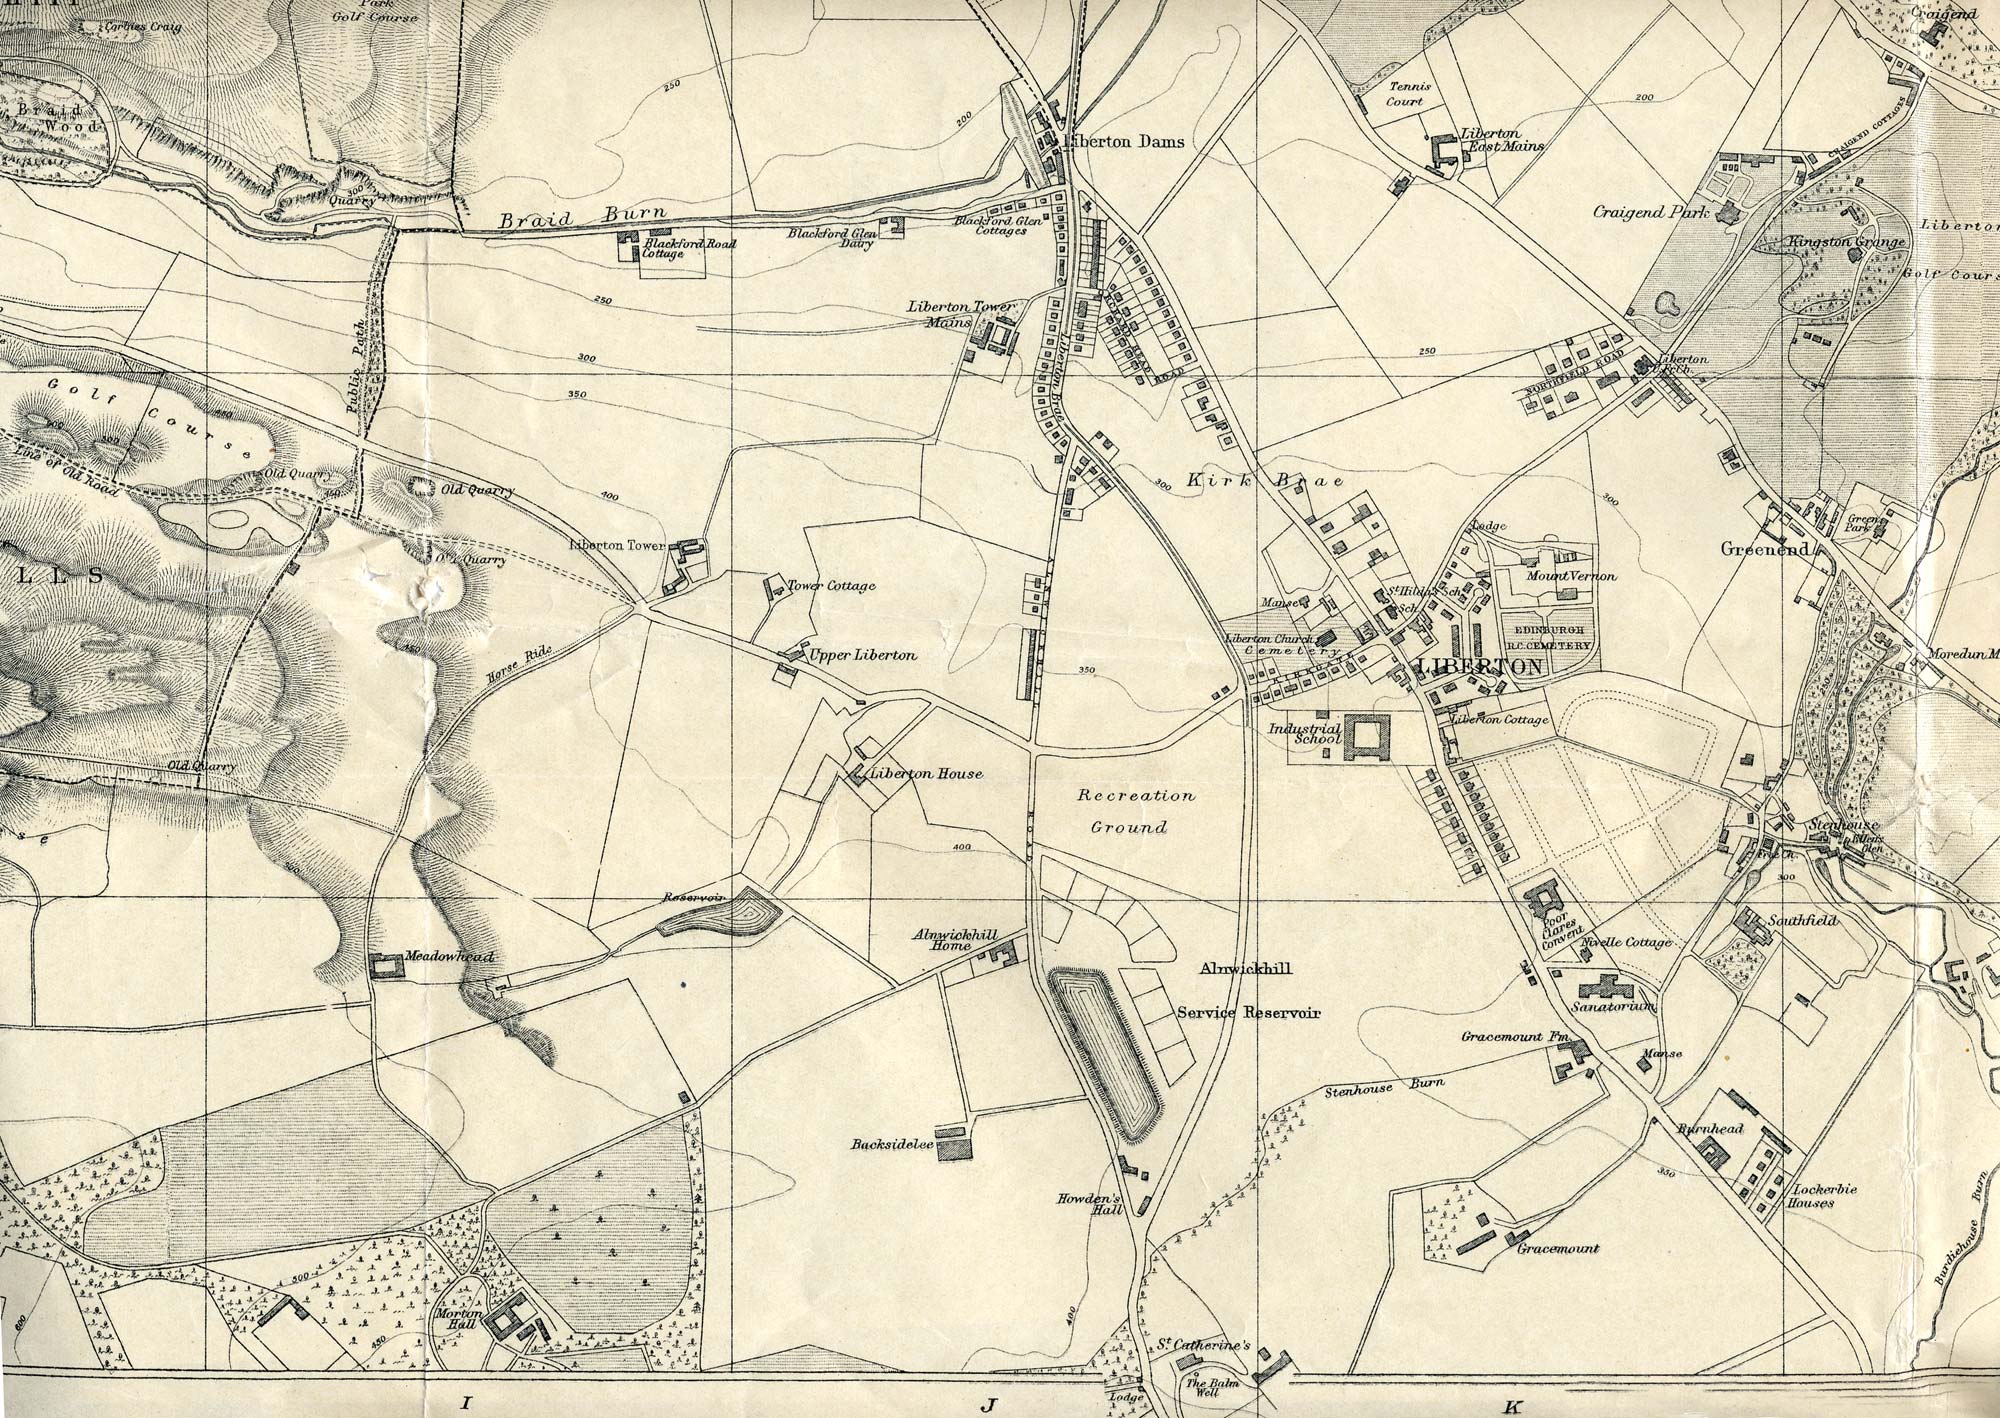 Edinburgh and Leith map, 1925  -  Liberton section  -  Enlarged